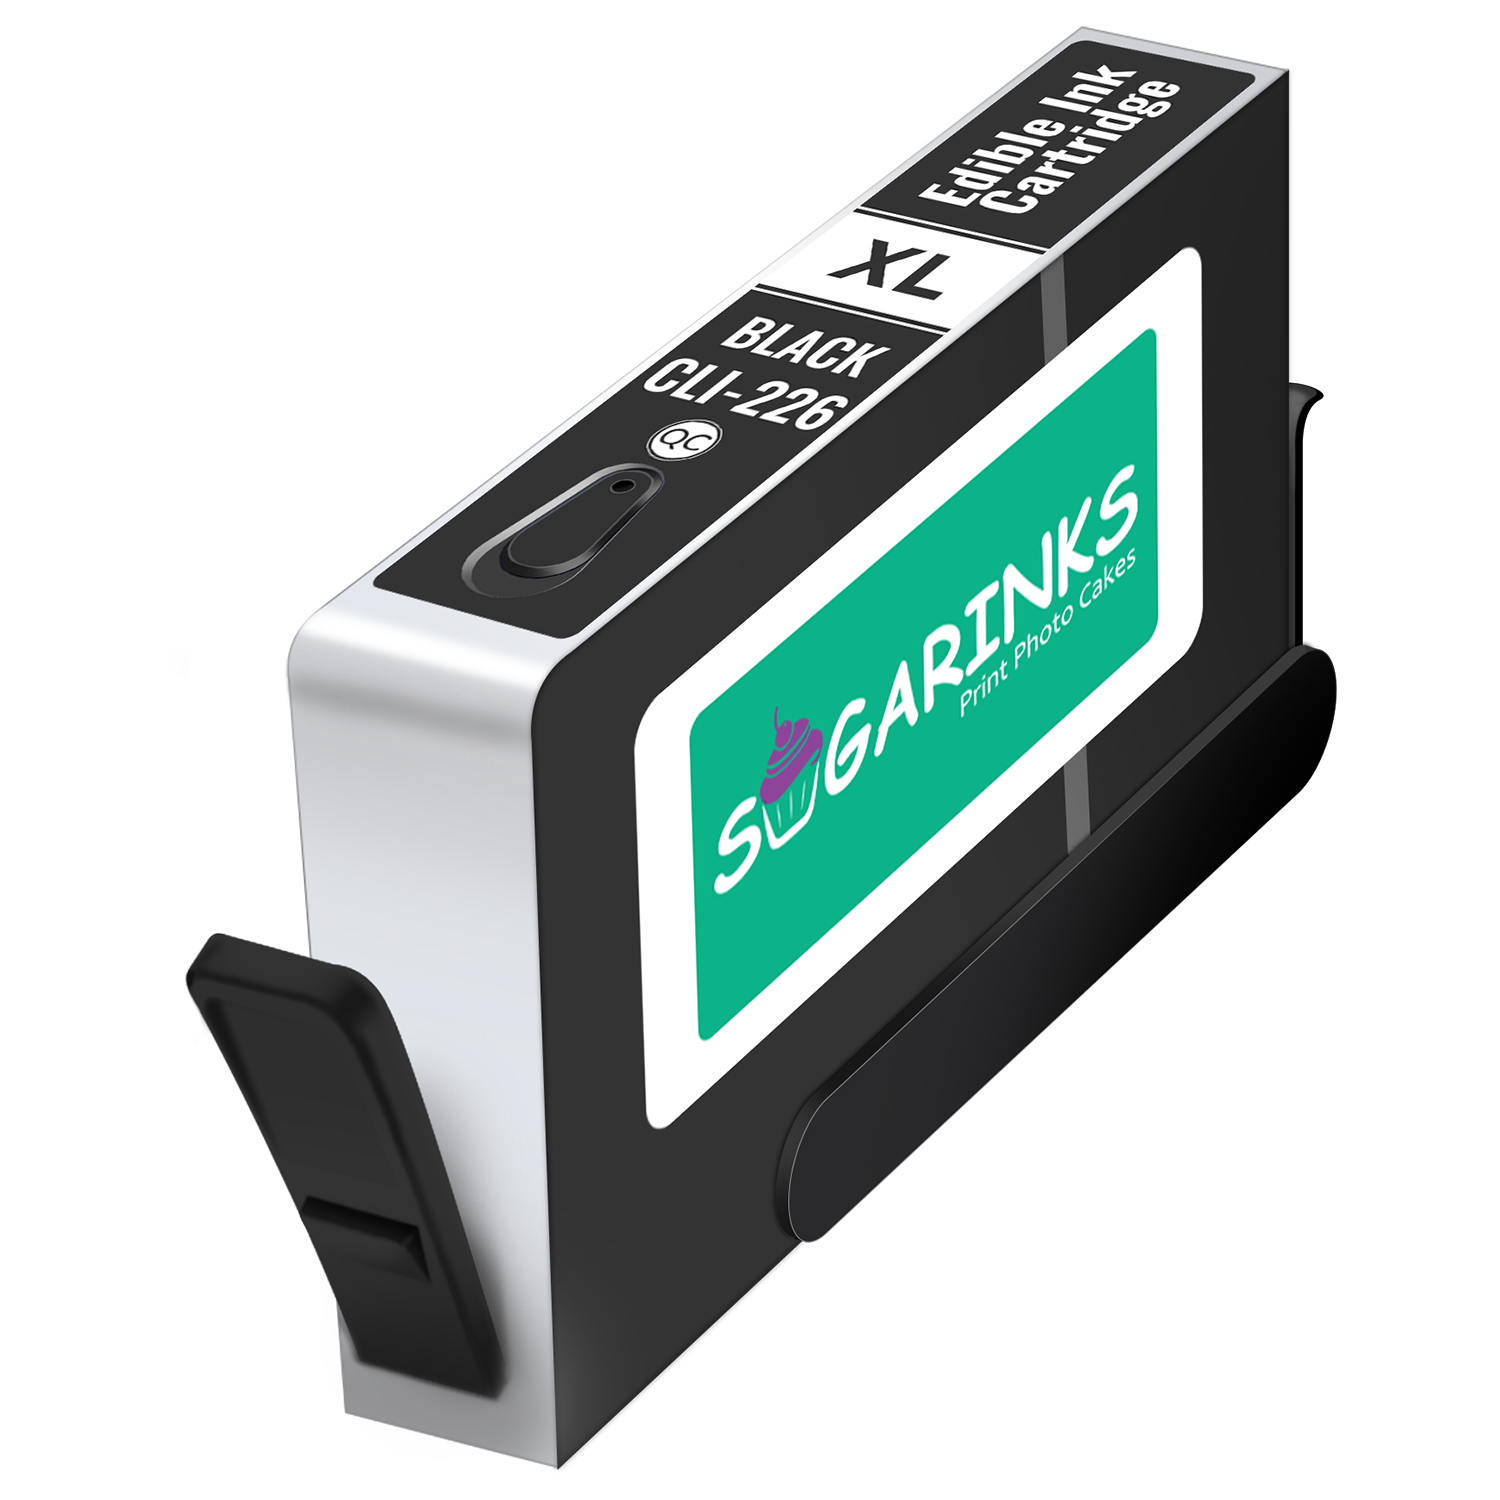 Sugarinks Edible Ink Cartridge CLI-226BK for Canon Edible Printers – Black